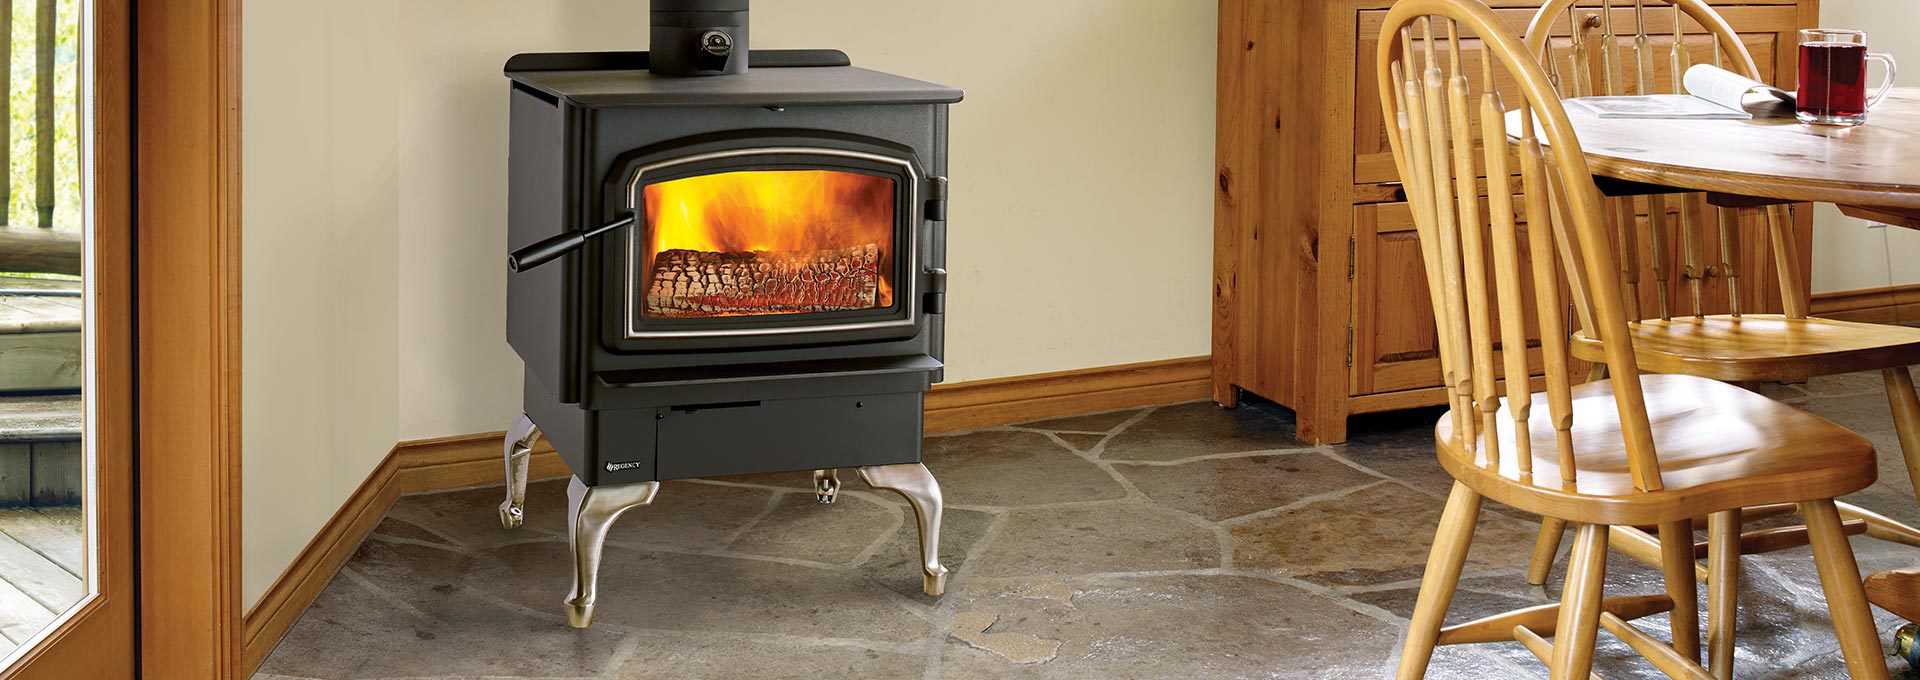 Regency Cascade Series F2500 wood stove